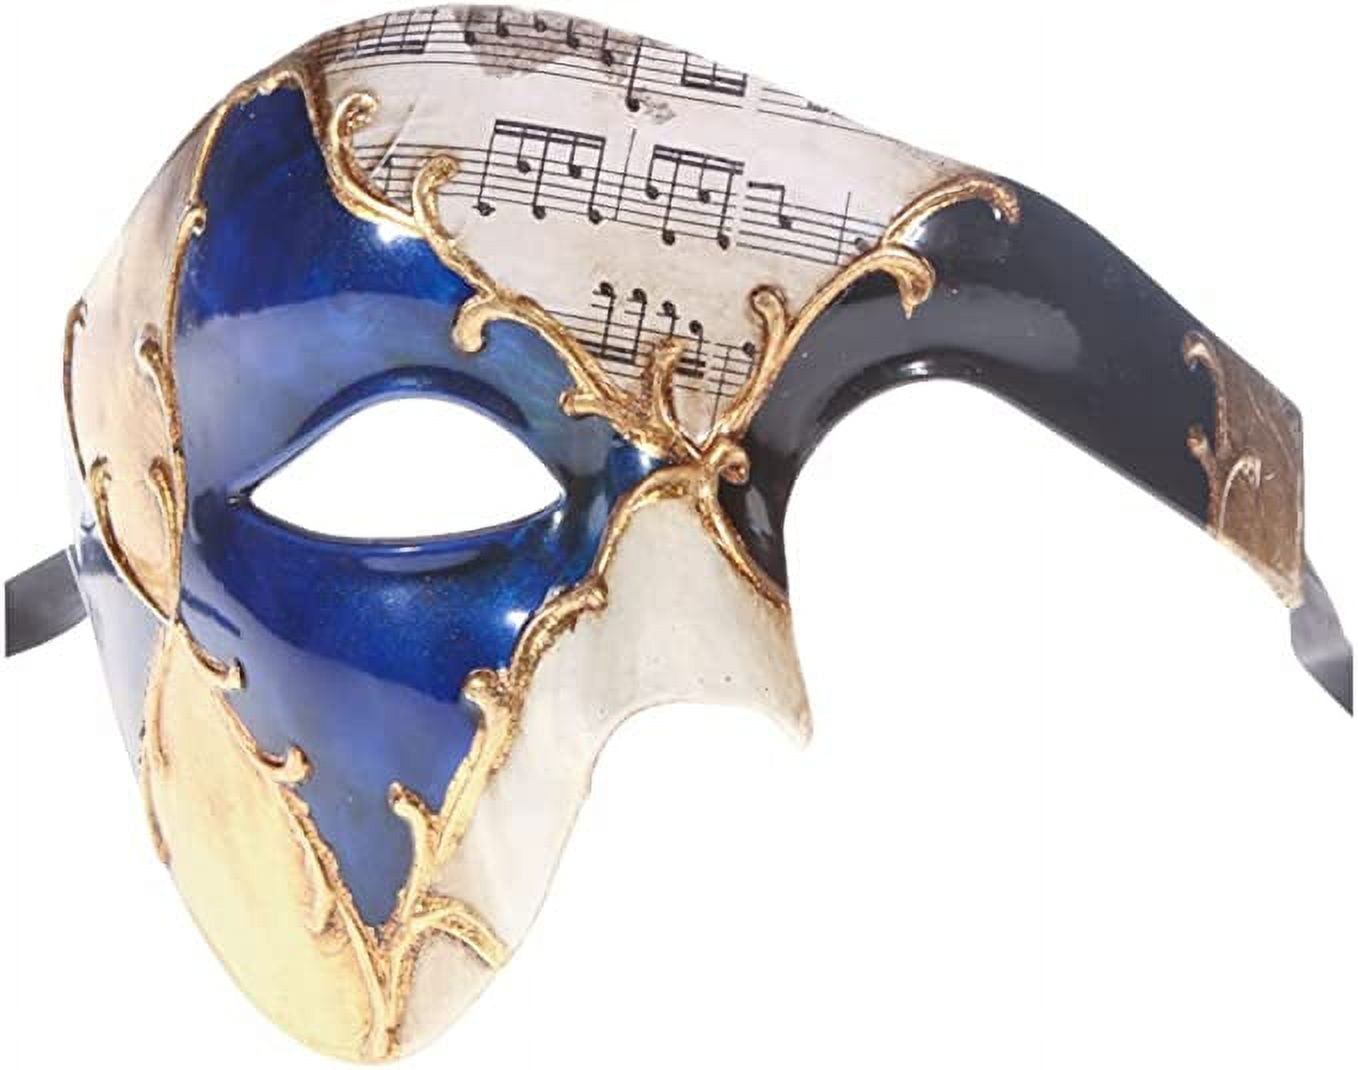 White Masks Venetian Masquerade Party Mask Christmas Gift Mardi